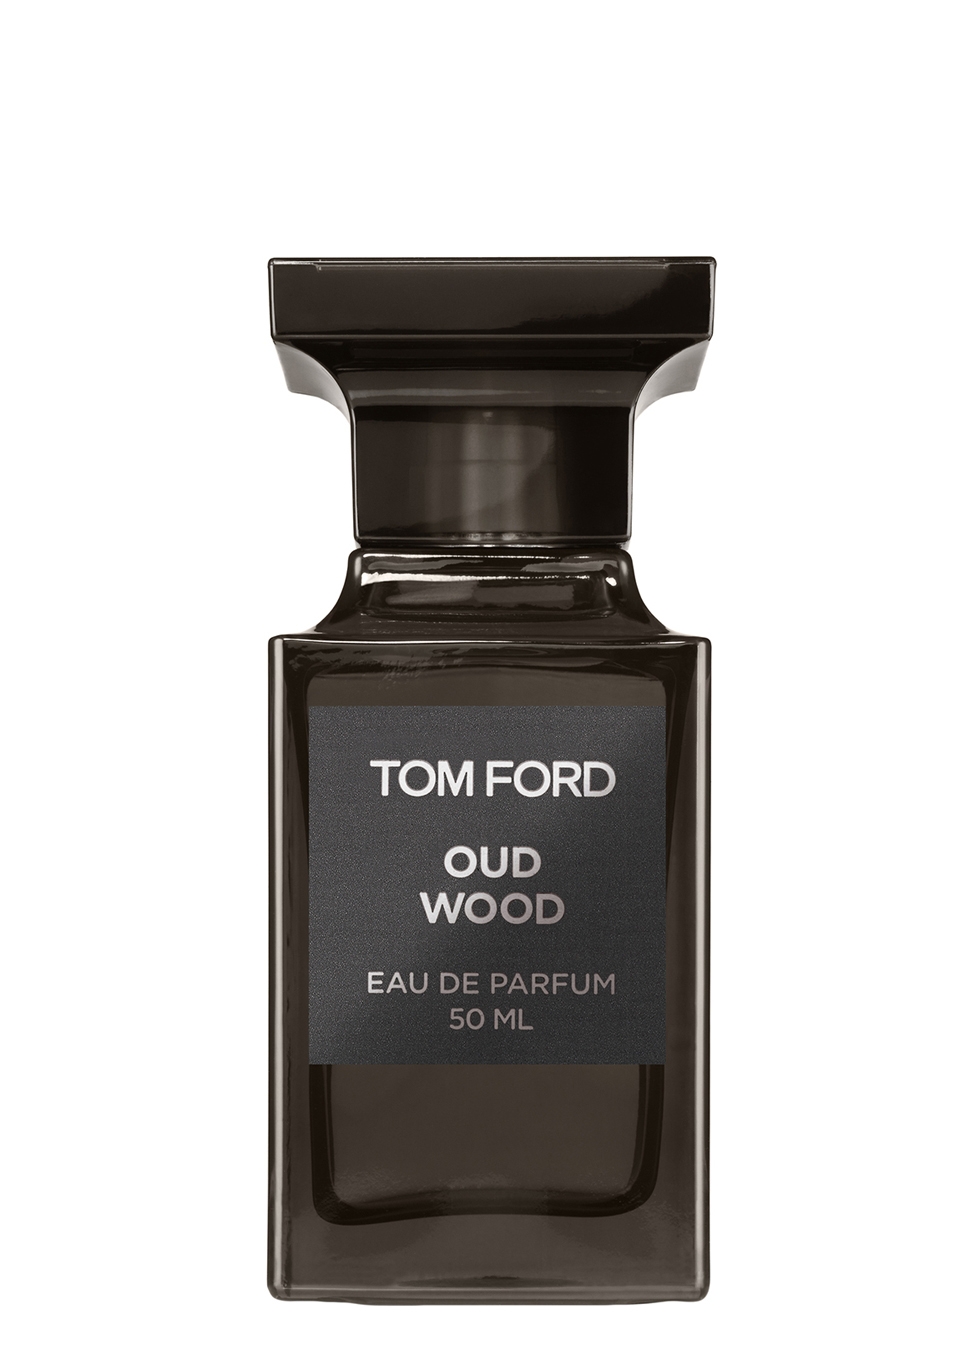 Tom Ford Oud Wood Eau De Parfum 50ml - Harvey Nichols